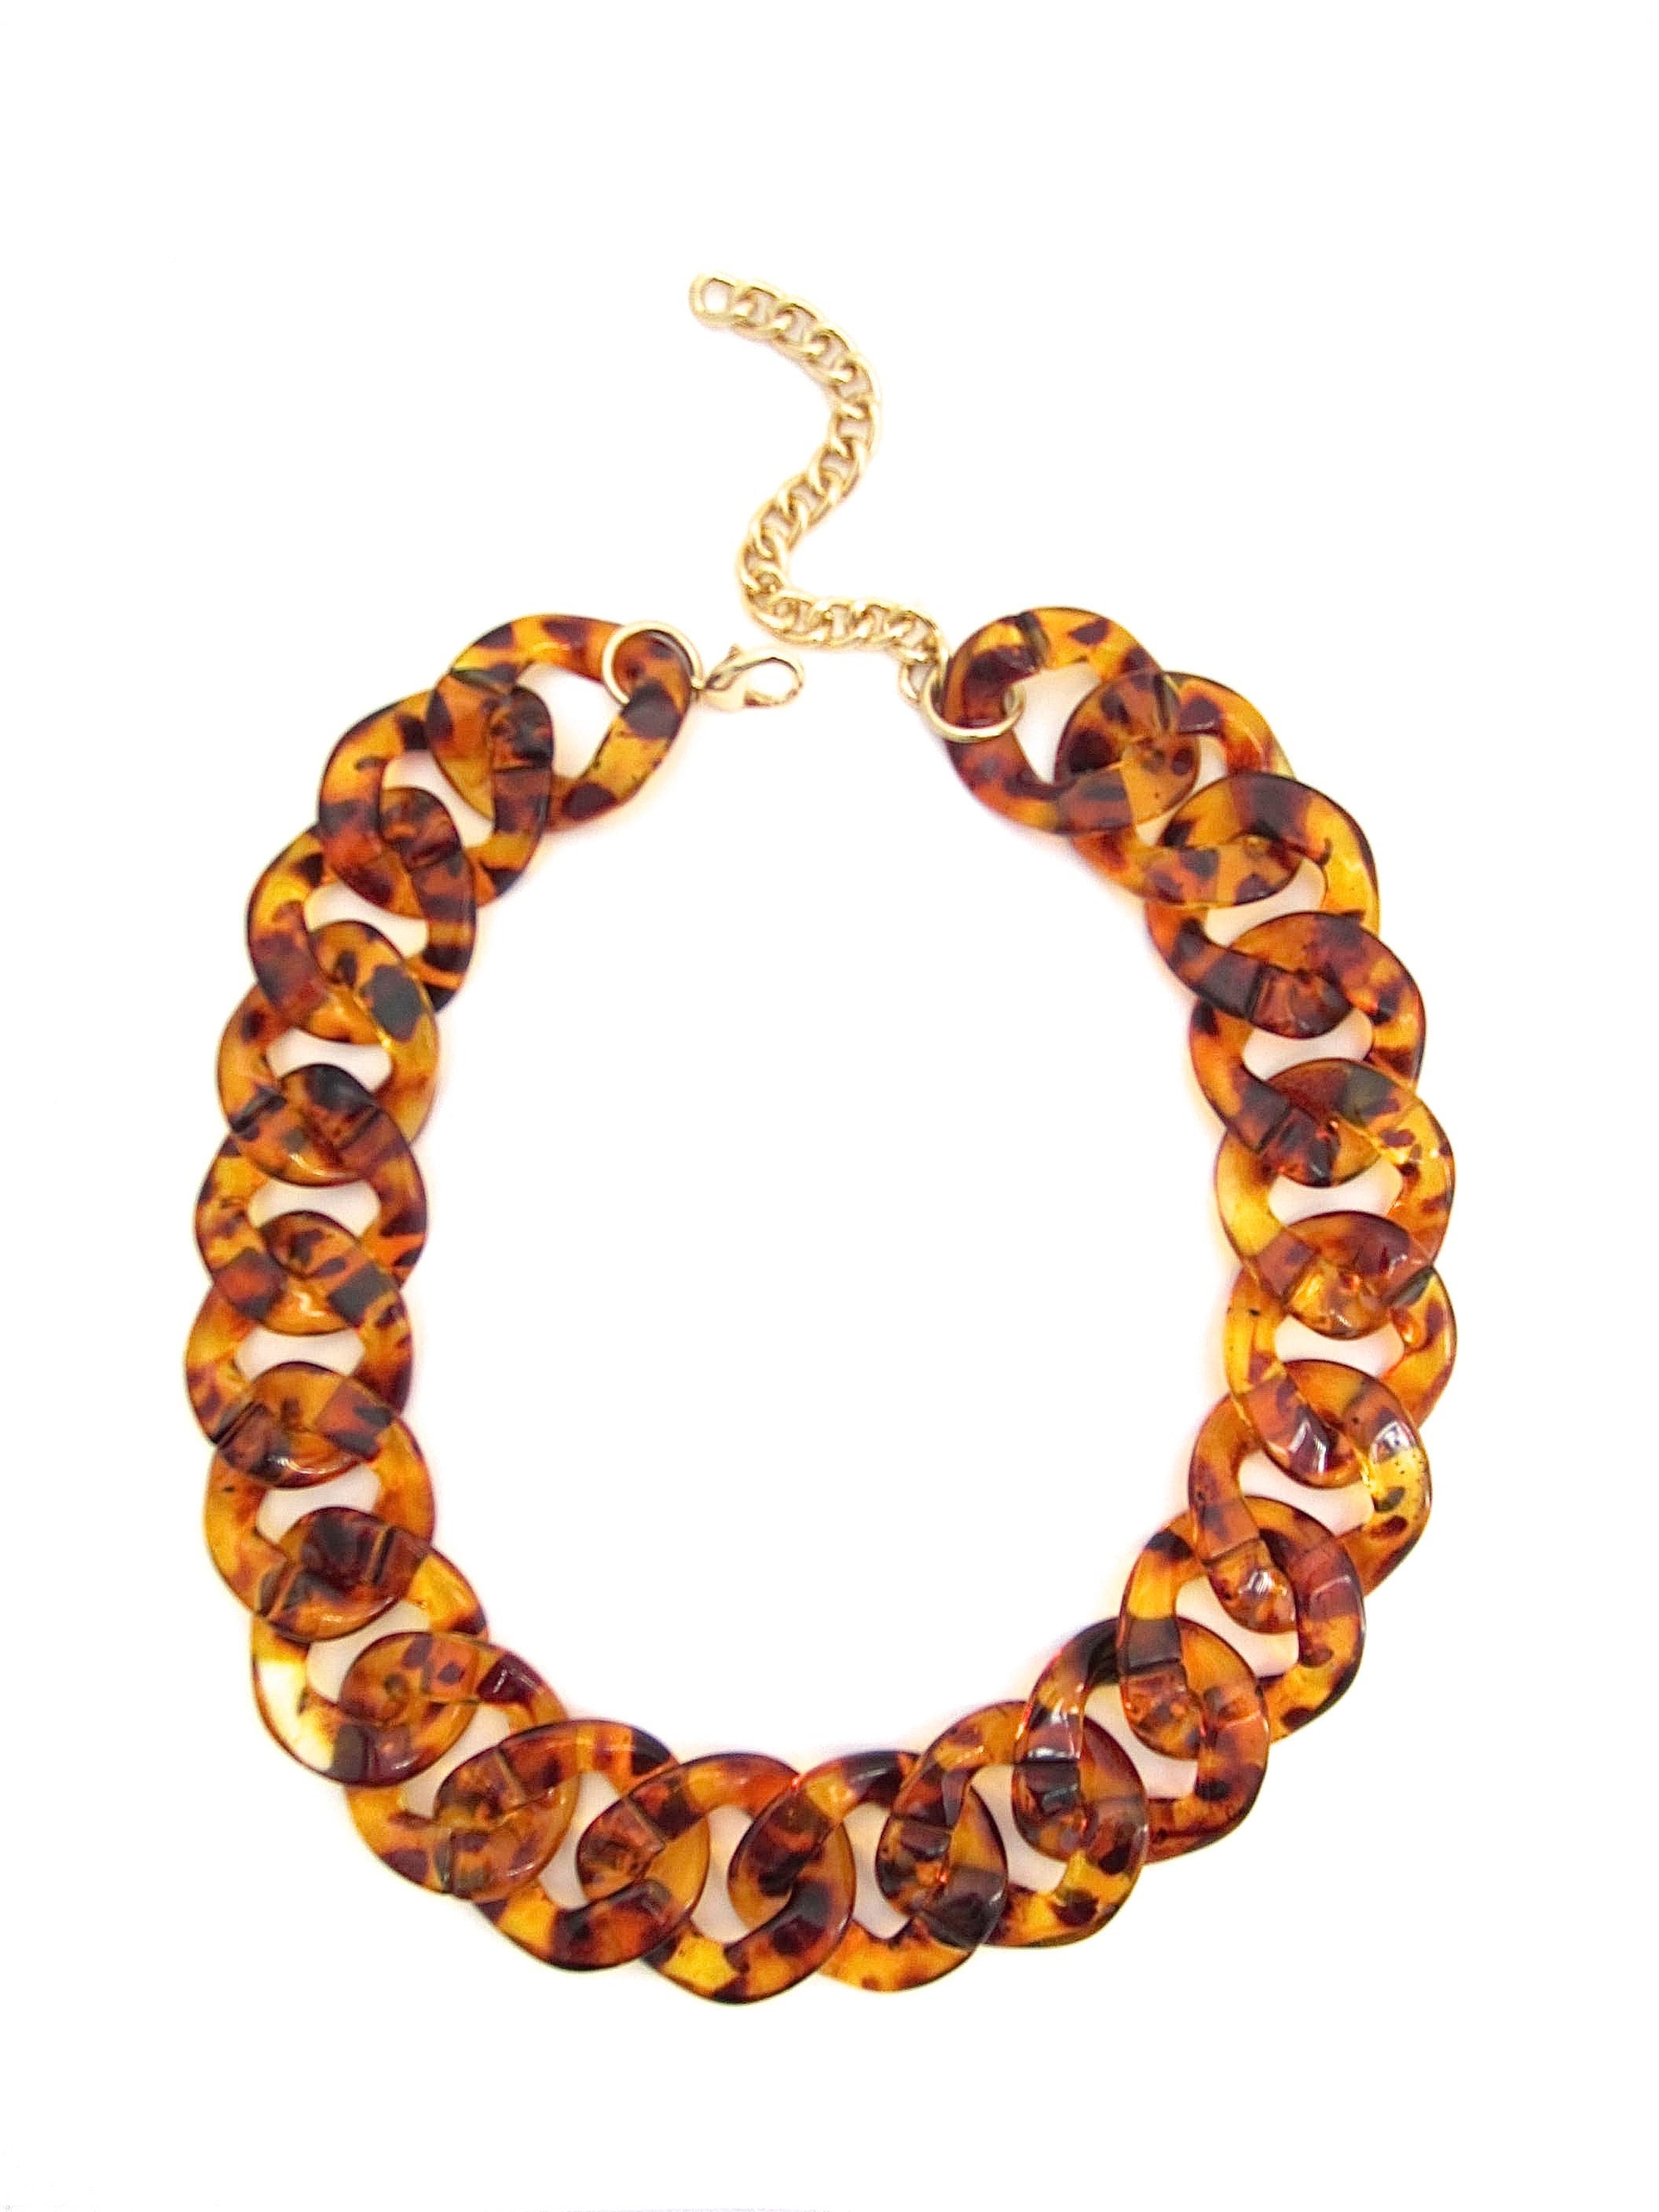 Tortoiseshell Statement Necklace, Chunky Tortoise Shell Resin Acrylic Link Chain, Leopard Print Jewelry